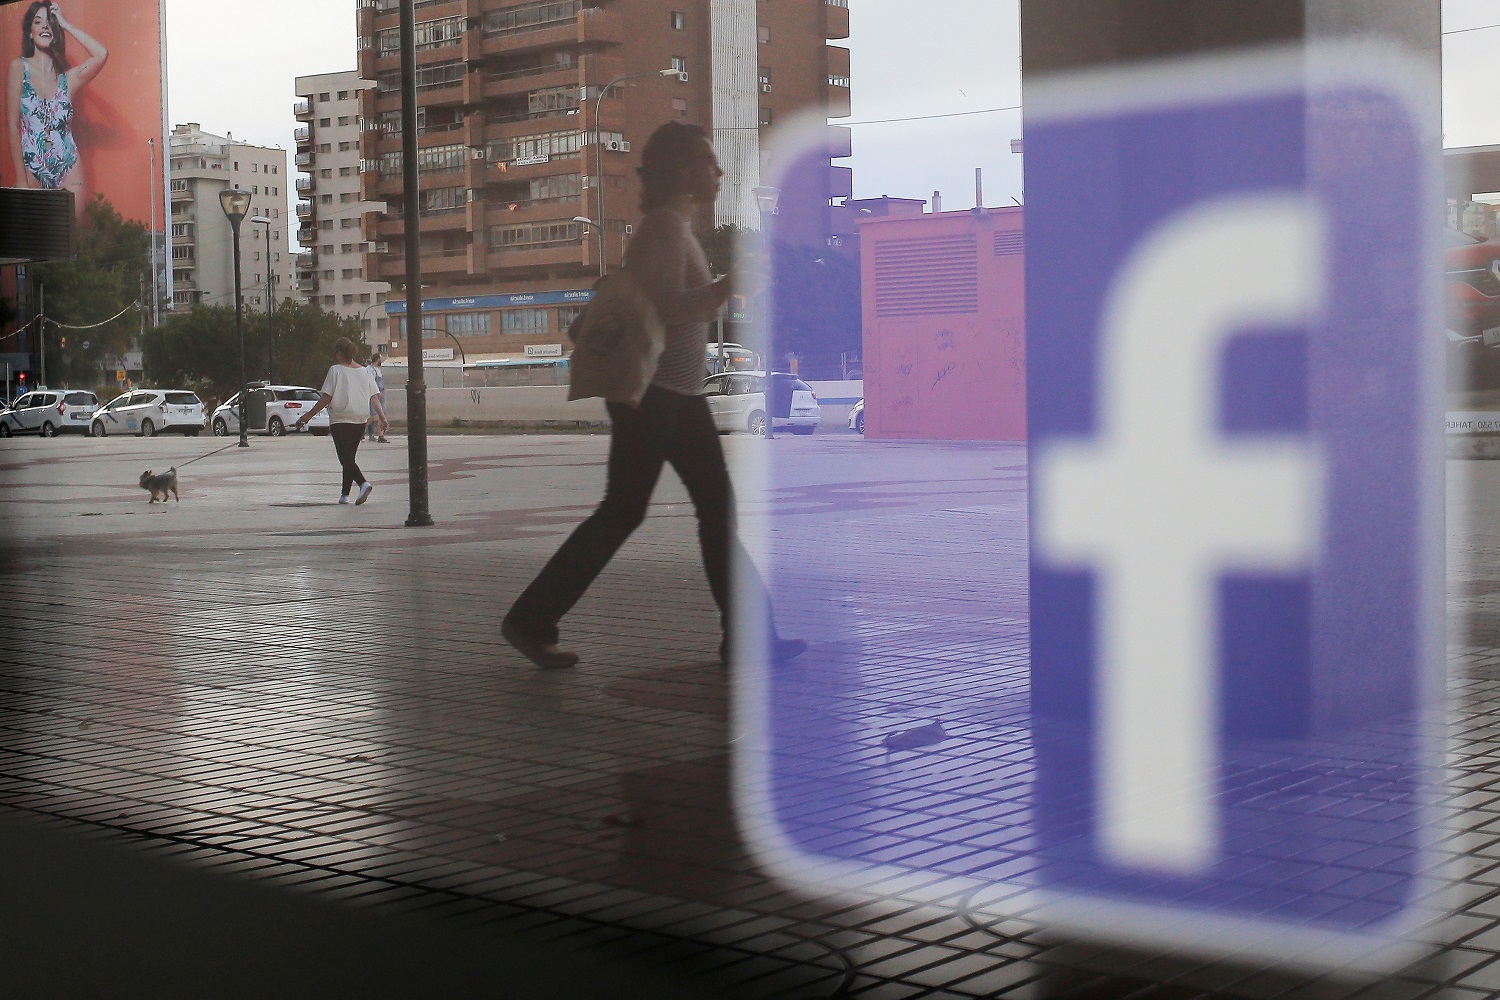  Facebook logo is seen on a shop window in Malaga